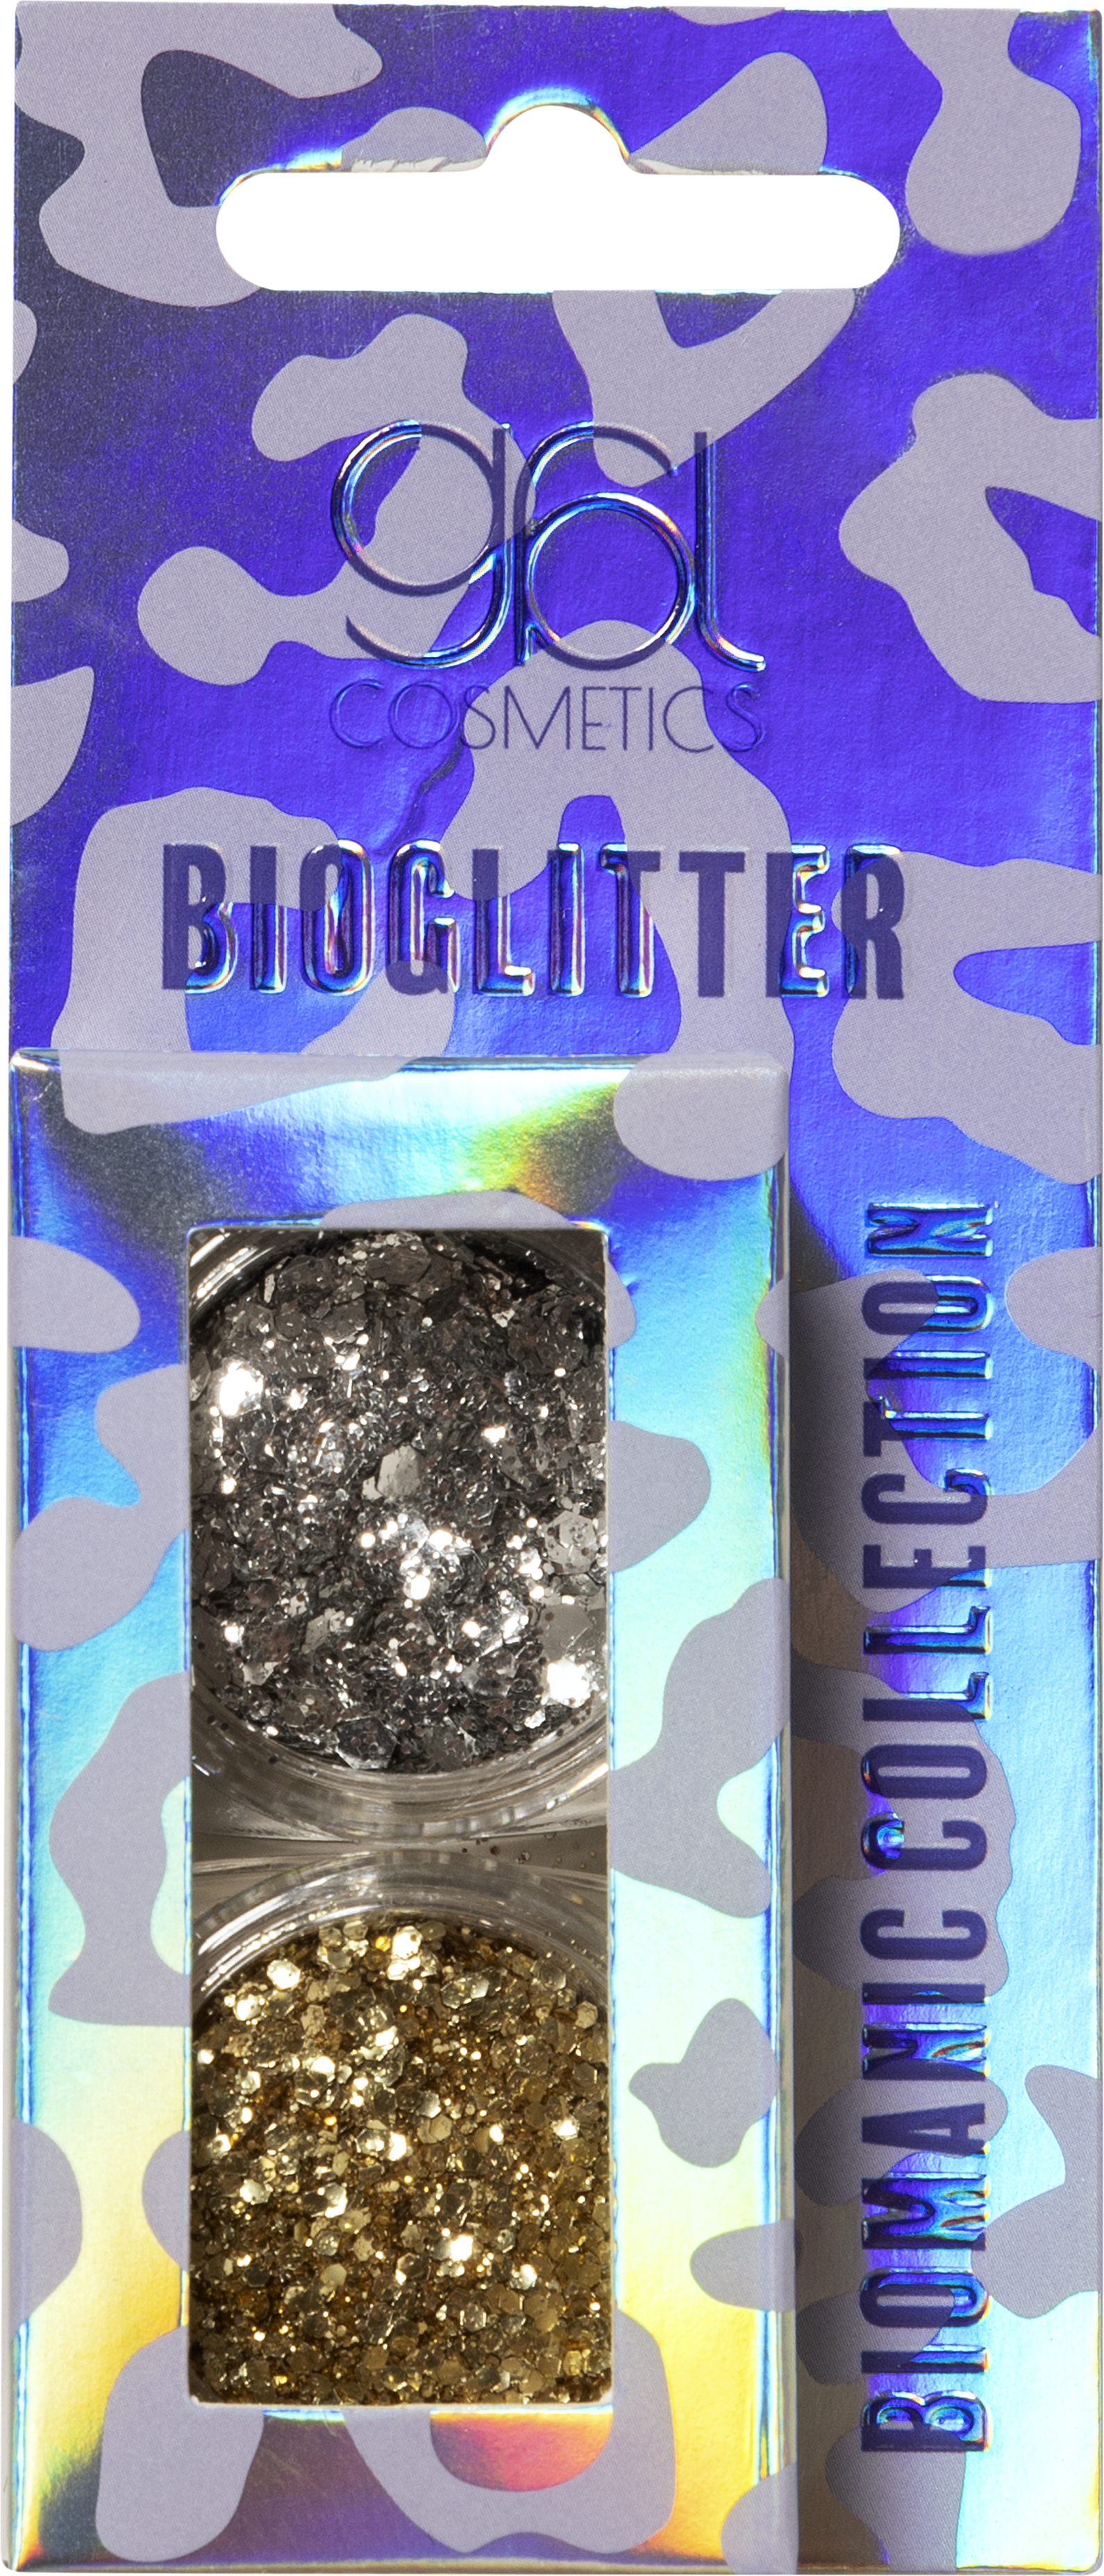 gbl Cosmetics Biomanic Collection Bioglitter 2 jars Royale